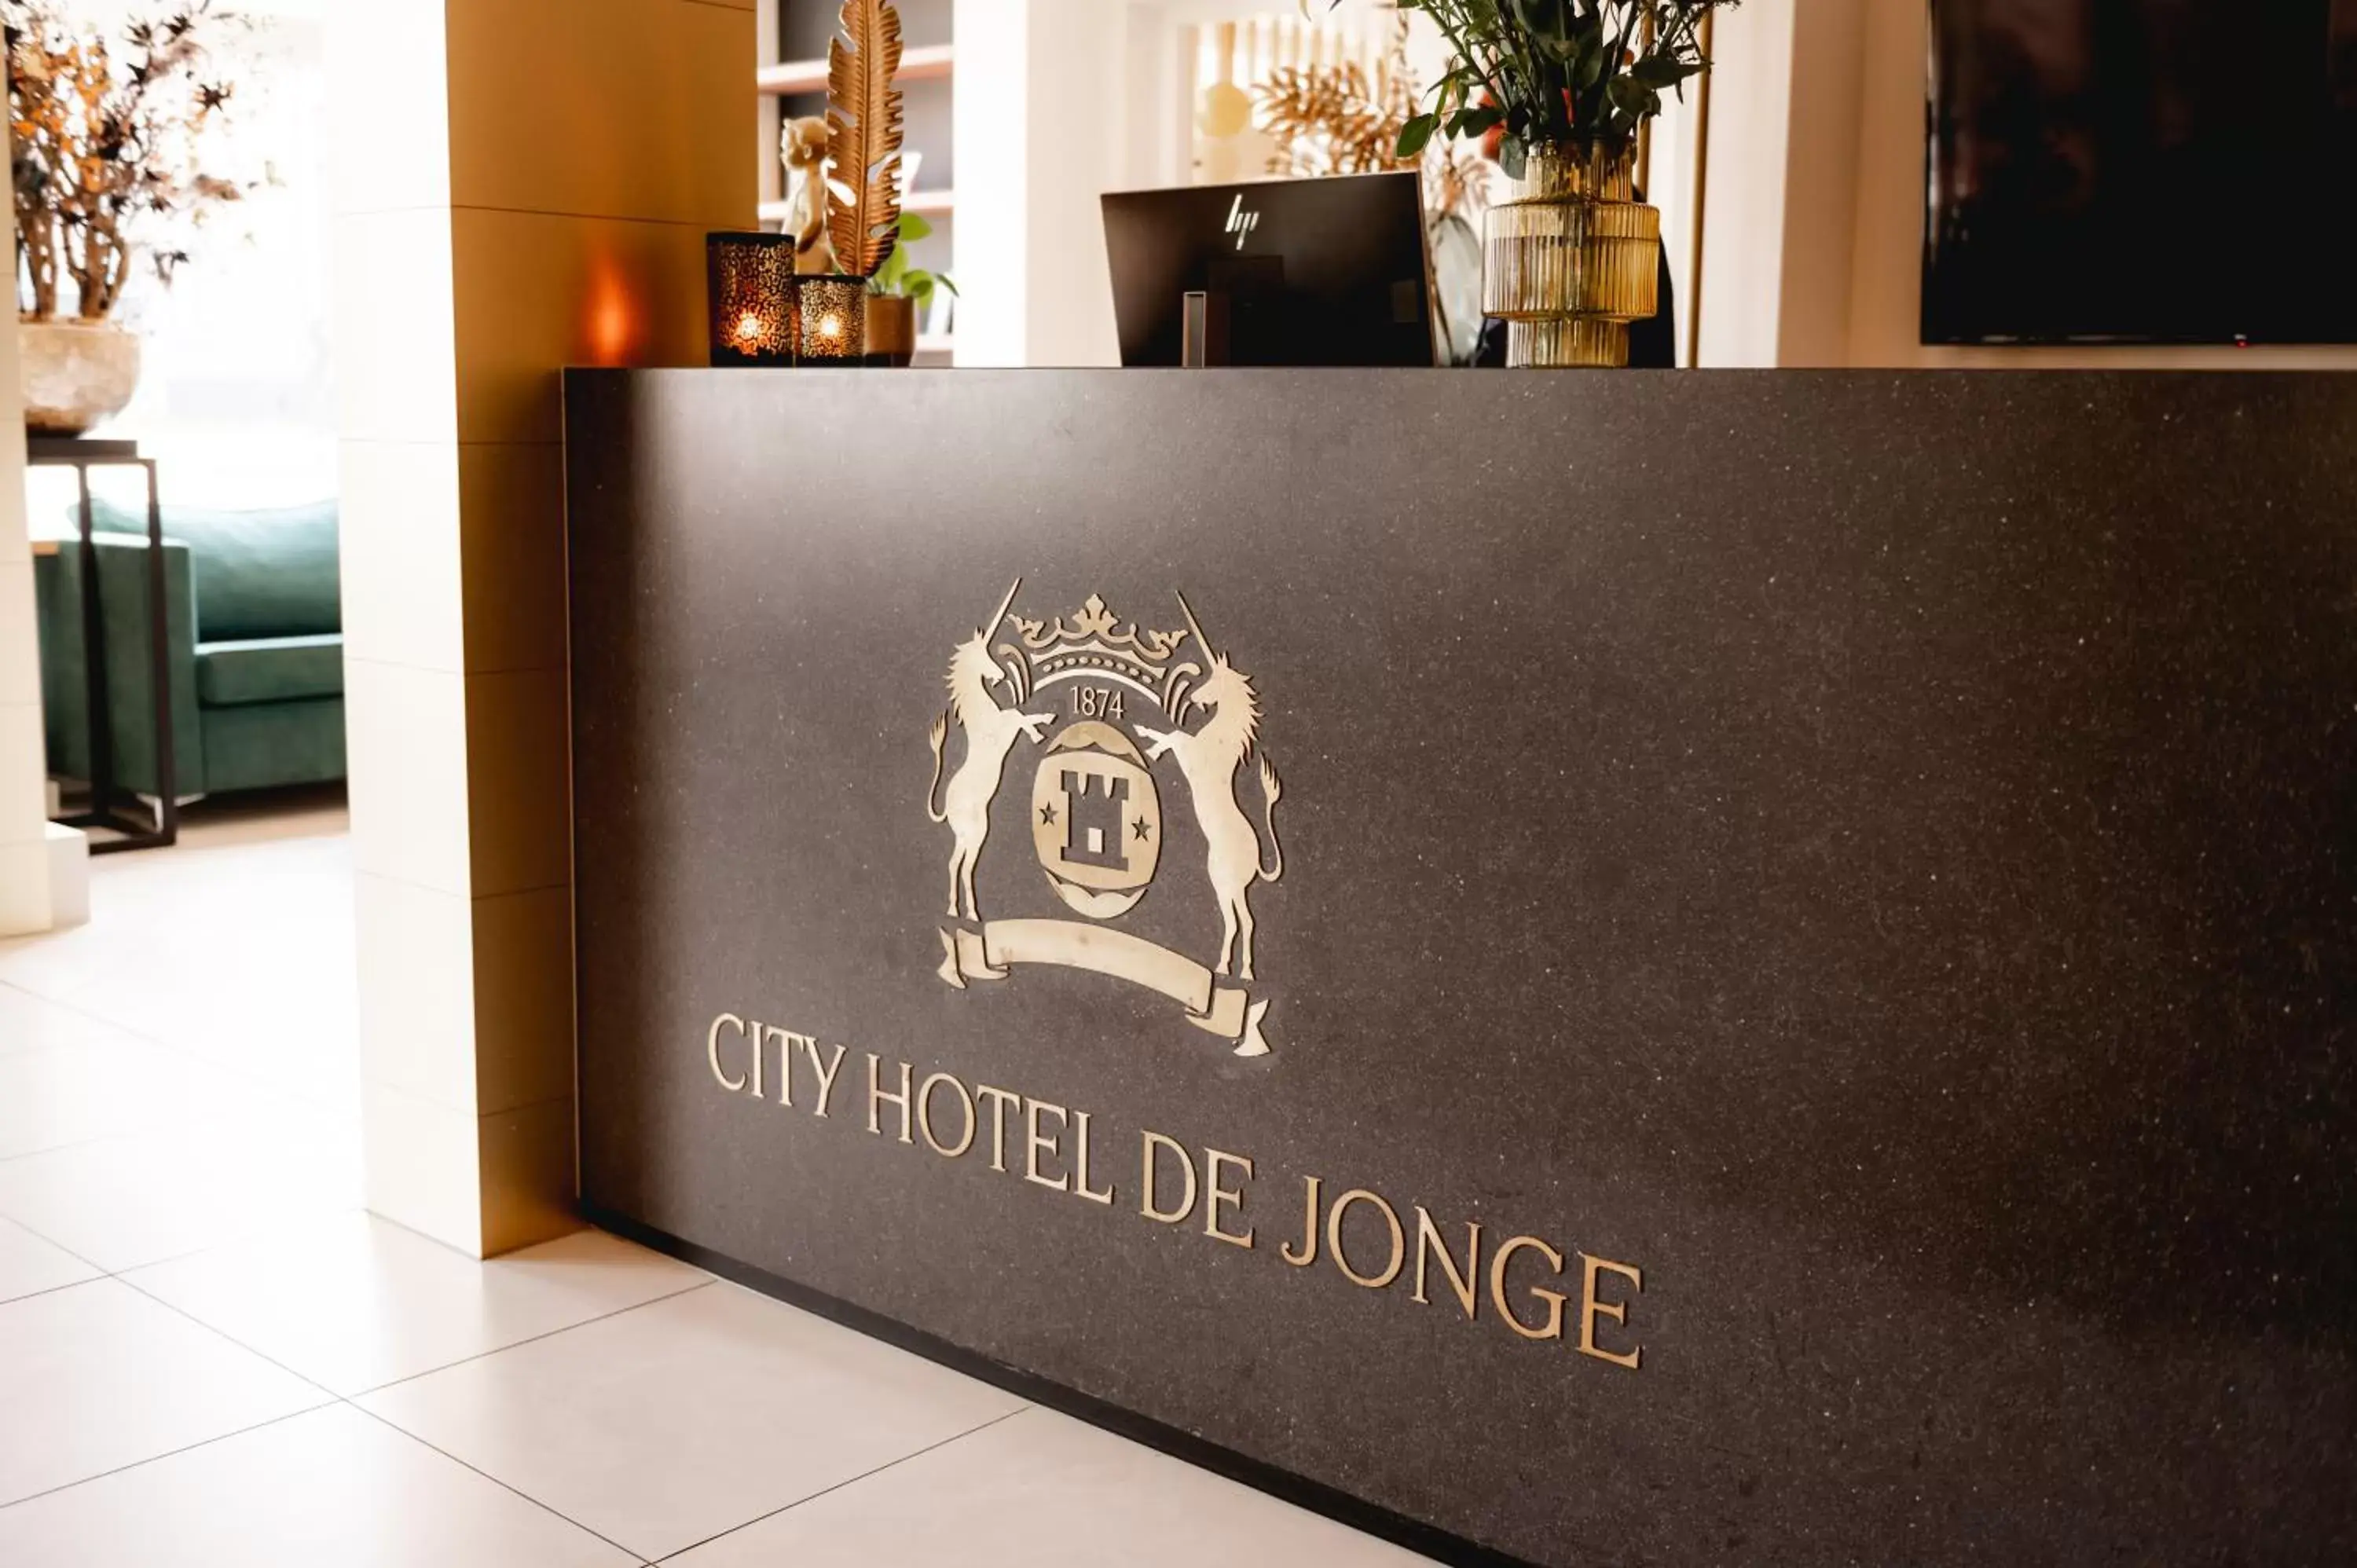 City Hotel de Jonge